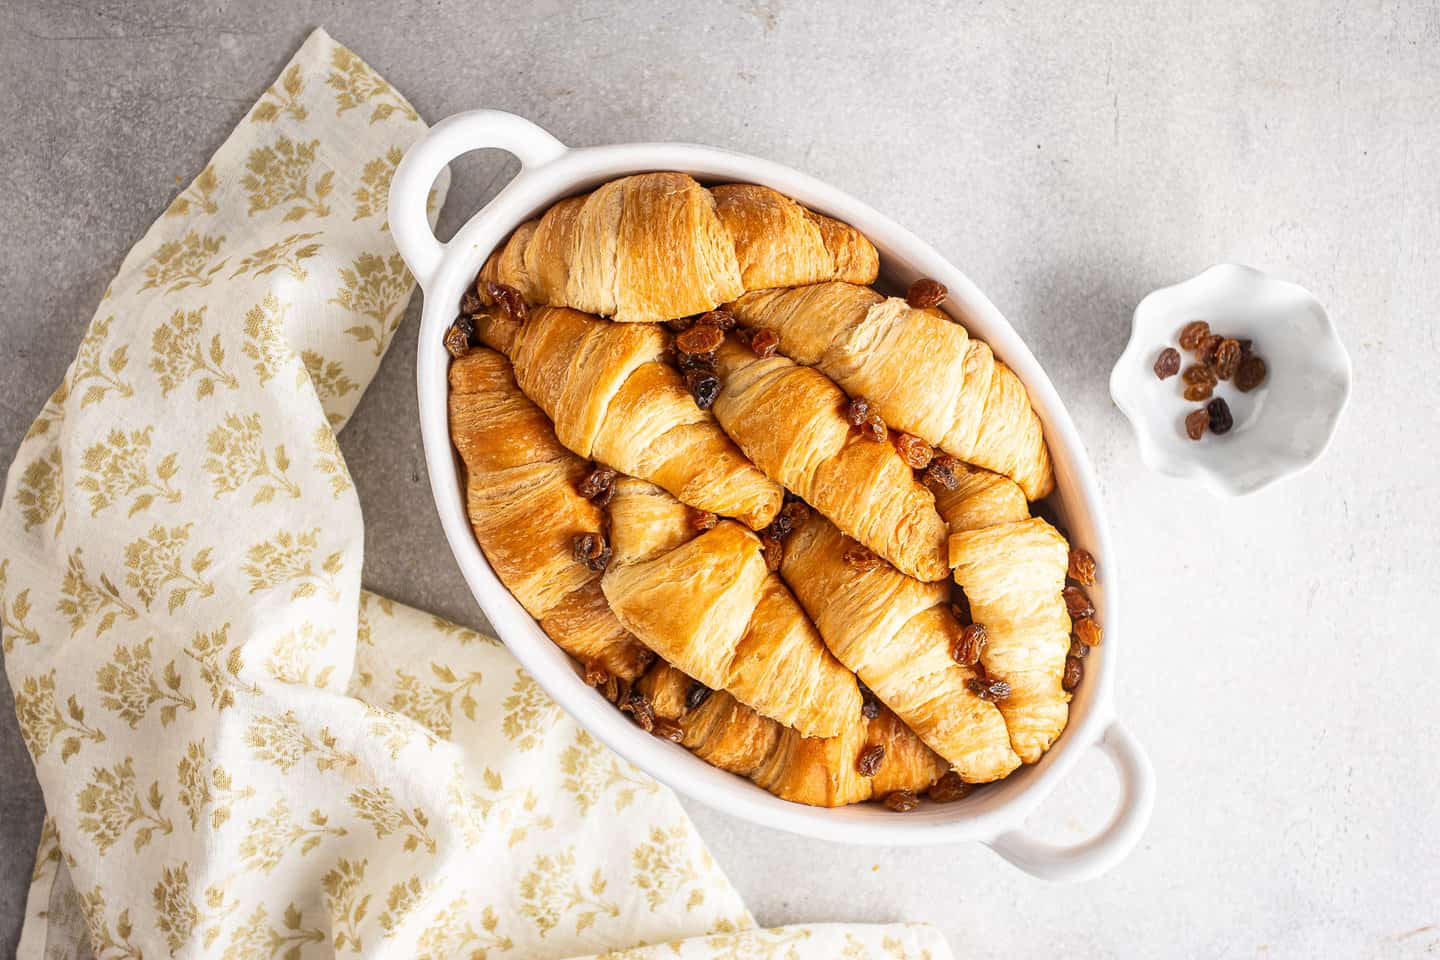 Croissants and golden raisins arranged in a baking dish.